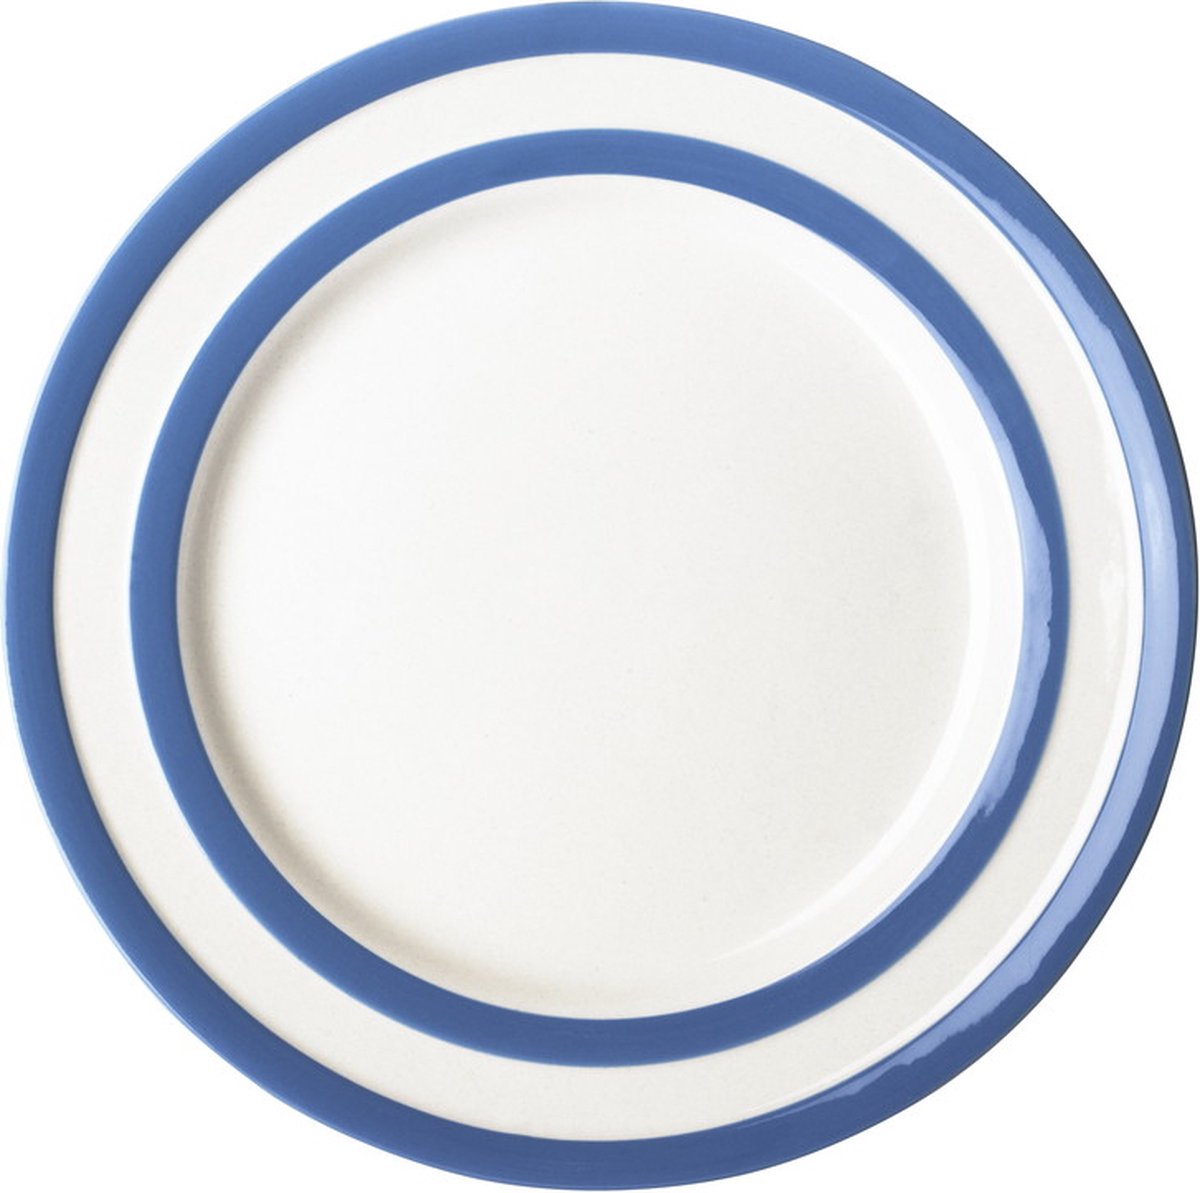 Cornishware Blue Breakfast Plate - ontbijtbord - blauw wit - gestreept - Cornish Blue - bordje